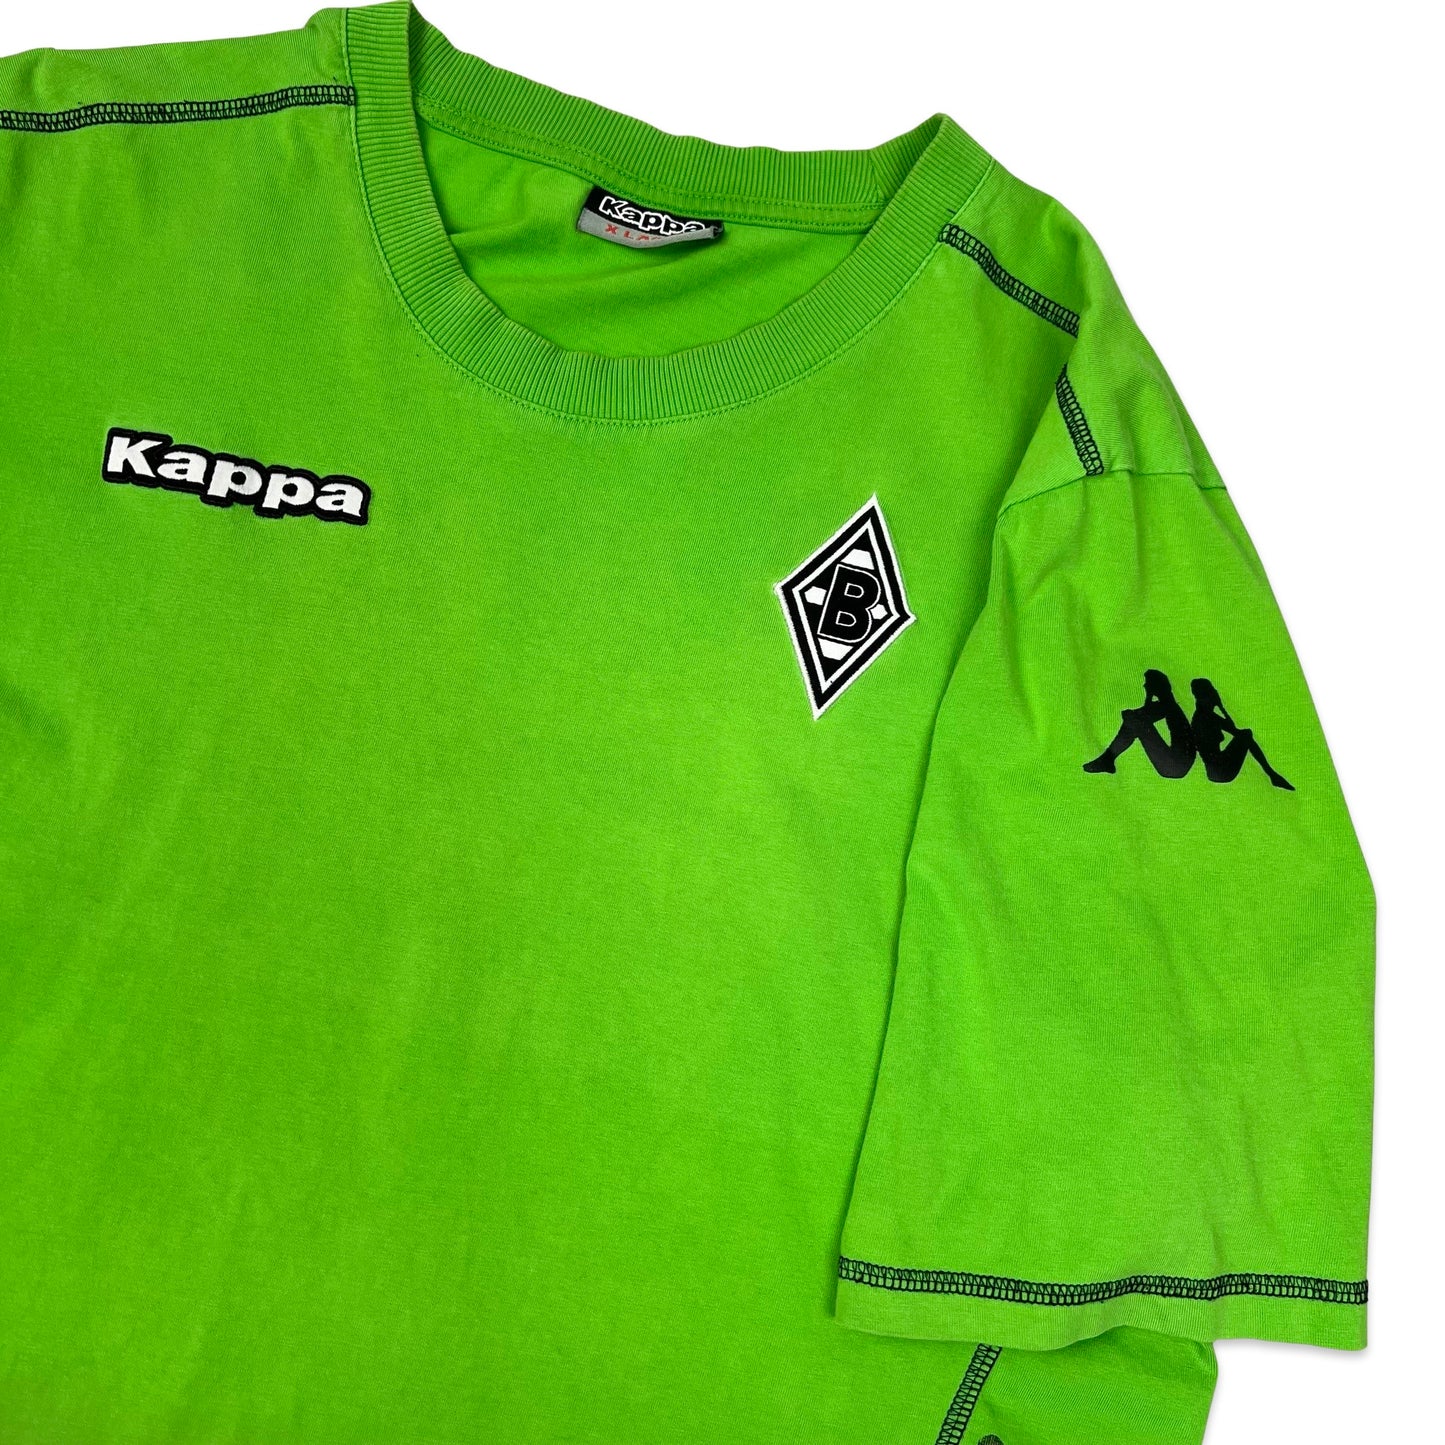 Kappa Borussia Monchengladbach Football Team Bright Green Tee S M